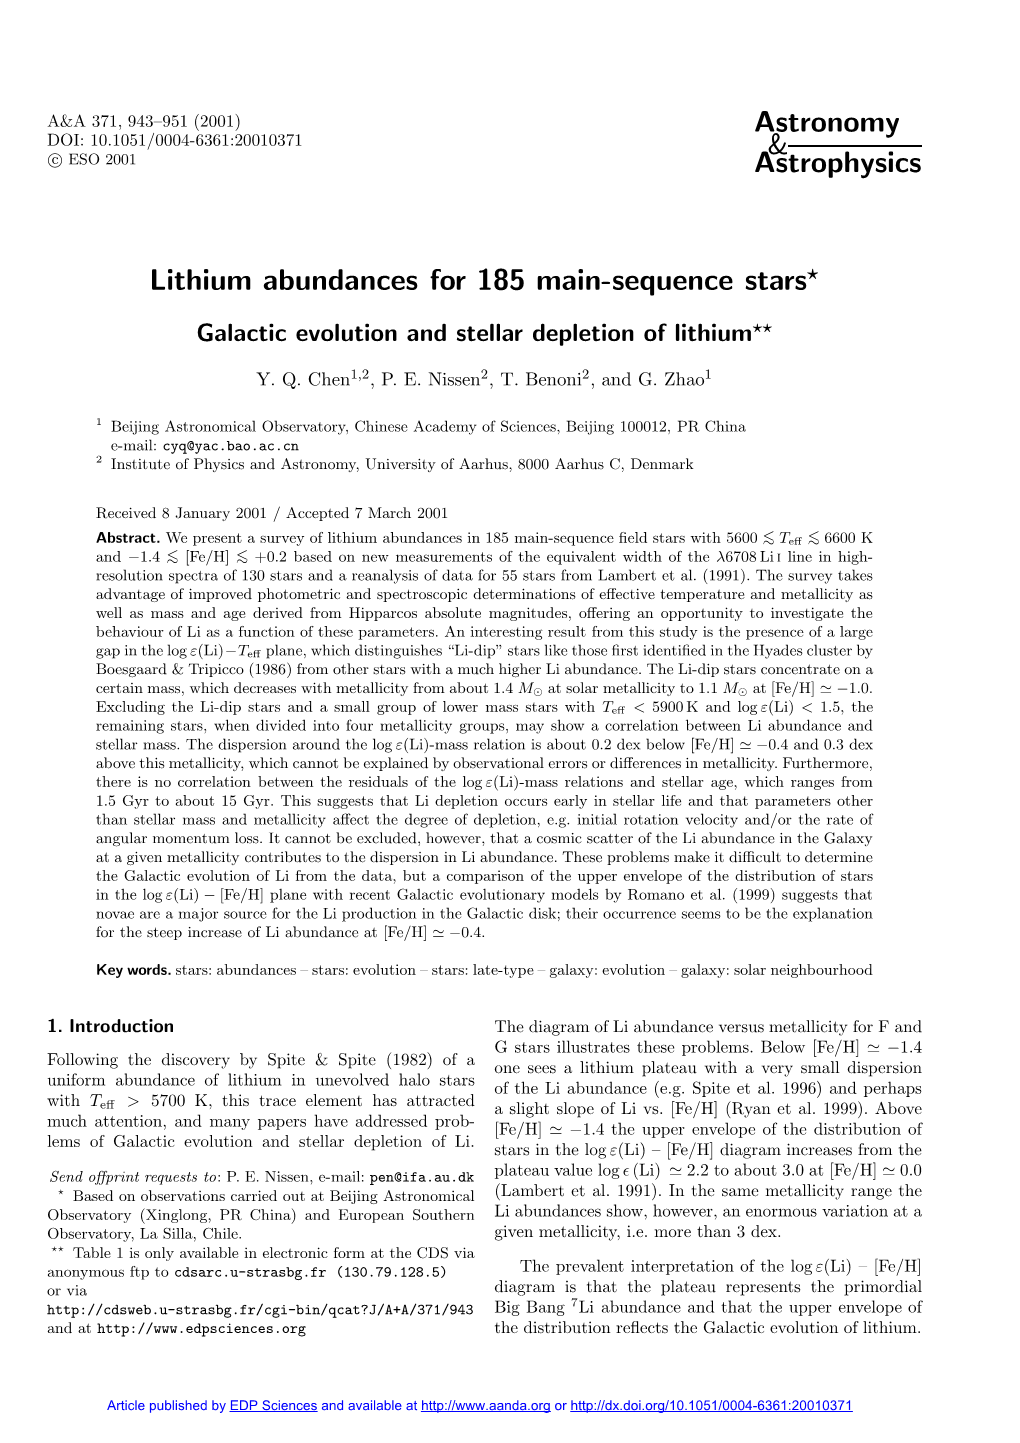 Lithium Abundances for 185 Main-Sequence Stars?